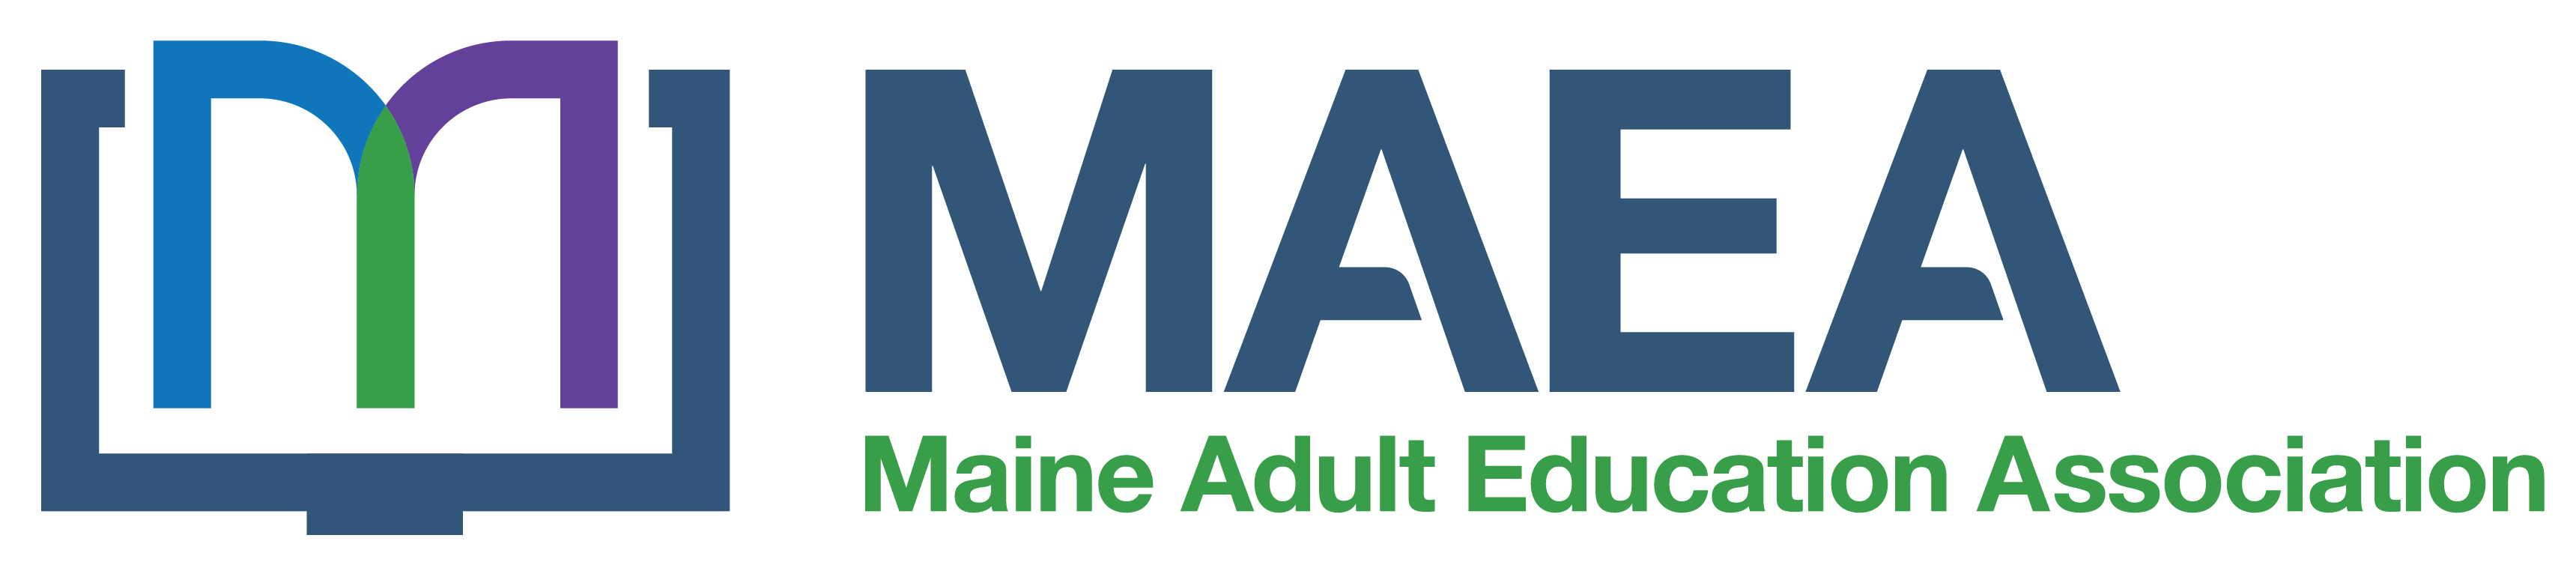 Maine Adult Education Association Logo